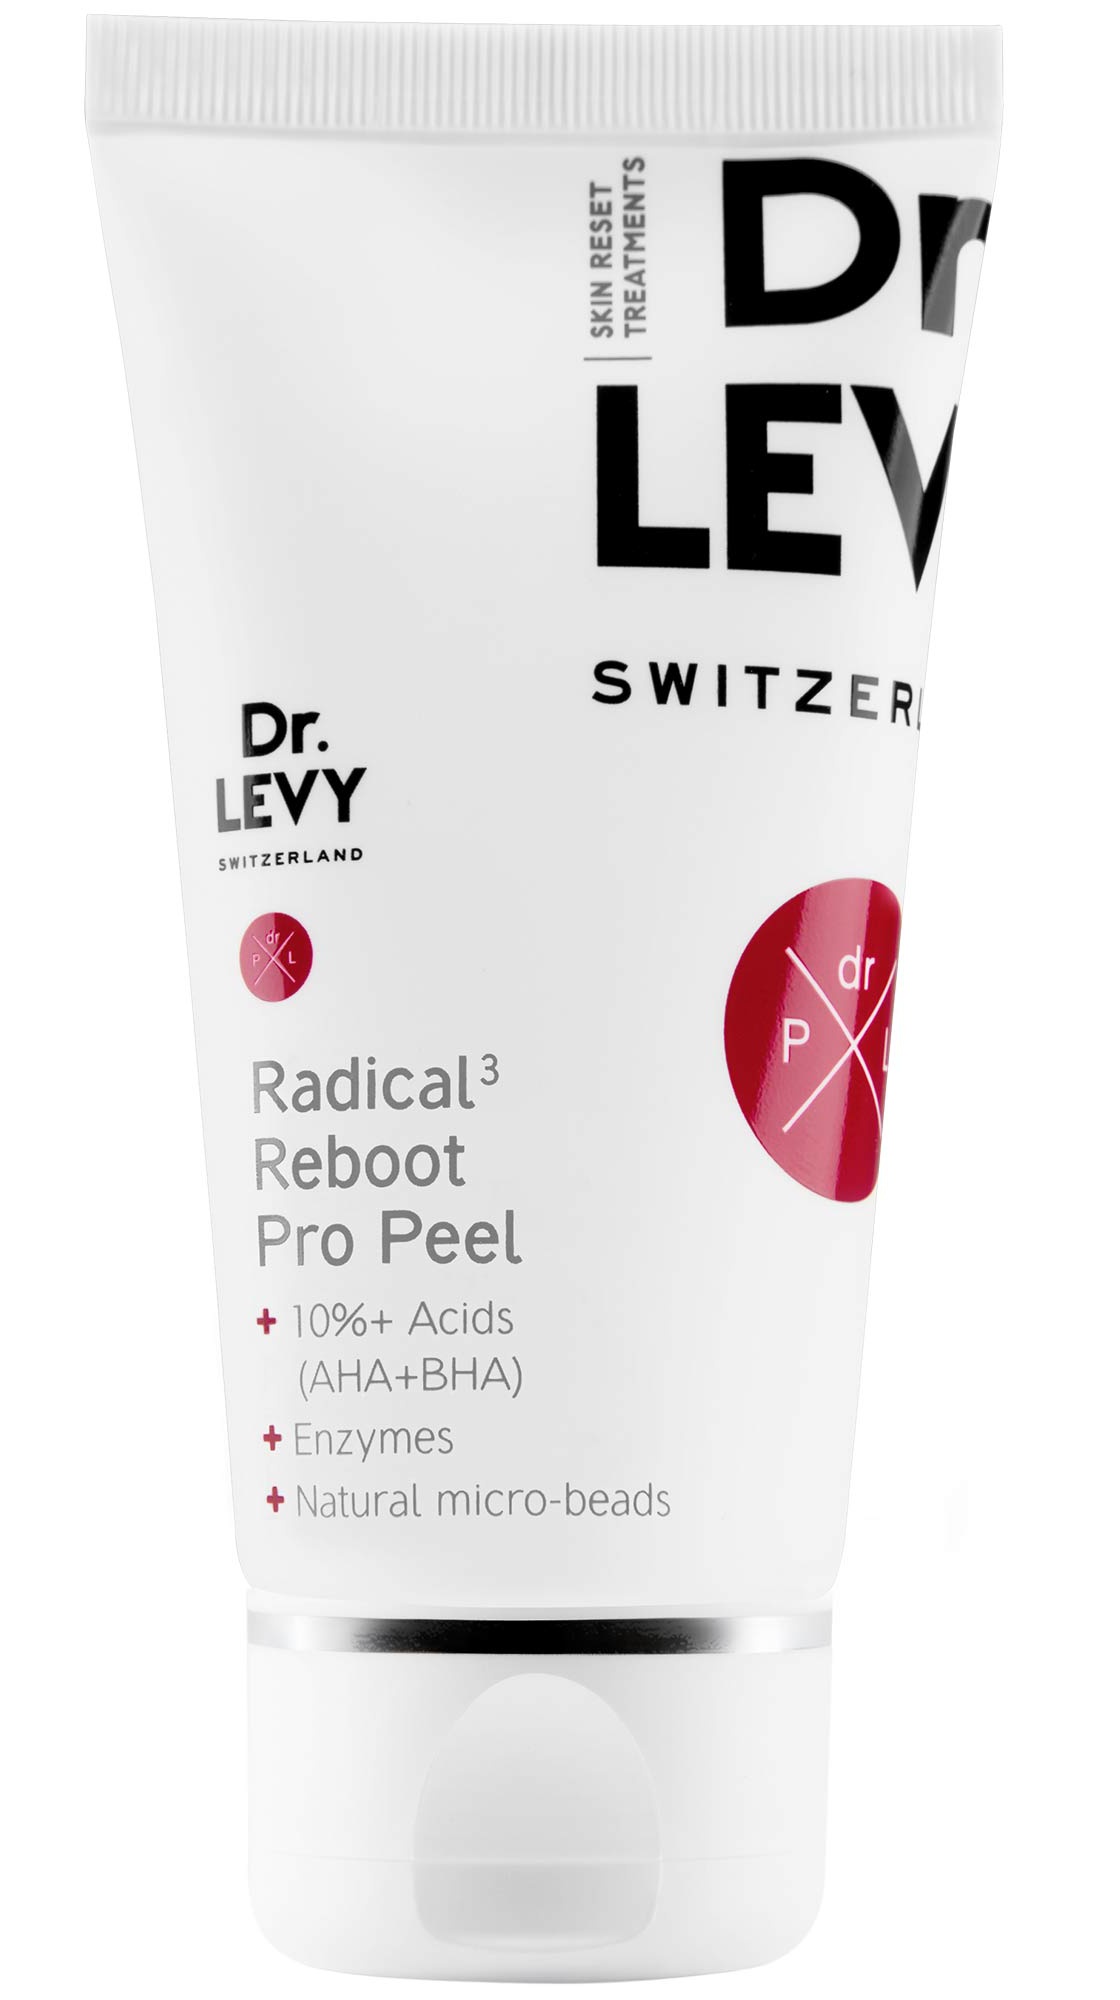 Dr Levy Radical3 Reboot Pro Peel